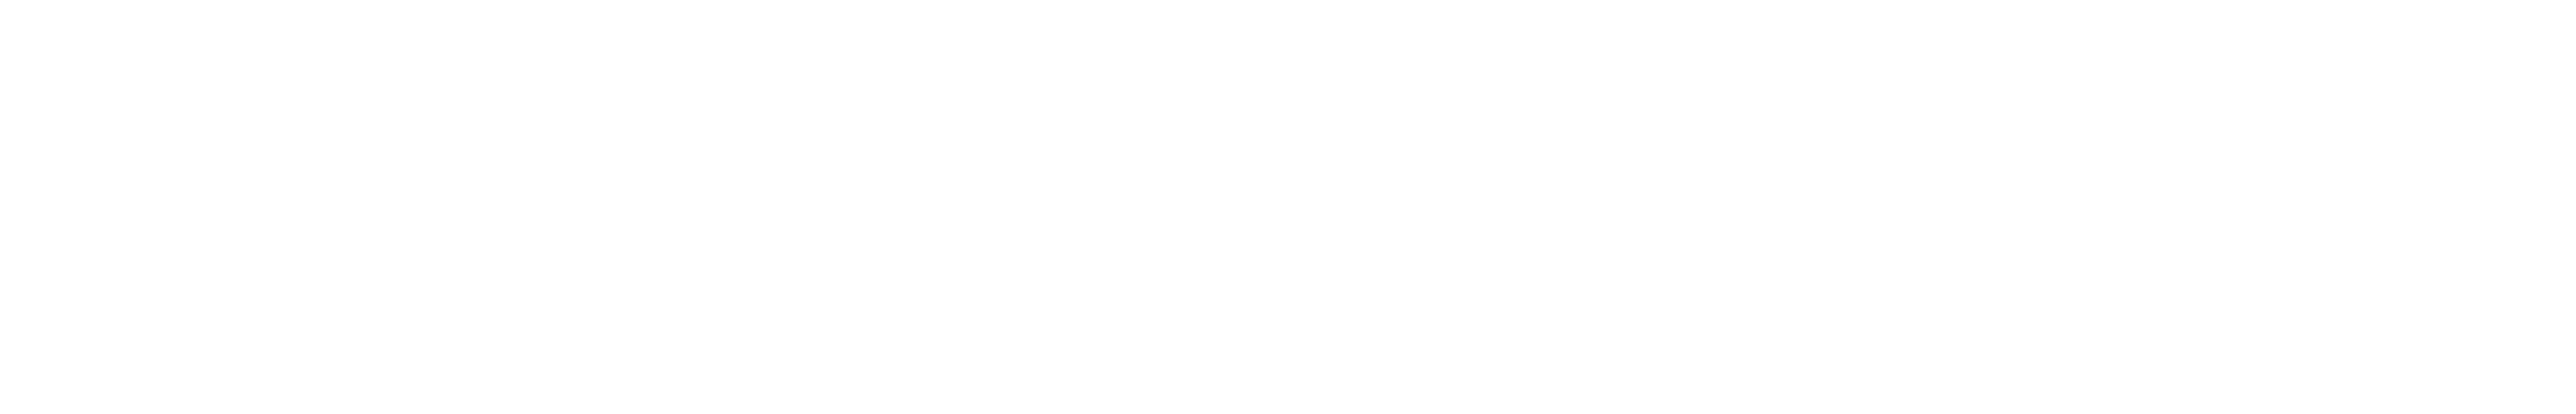 CargoProbe